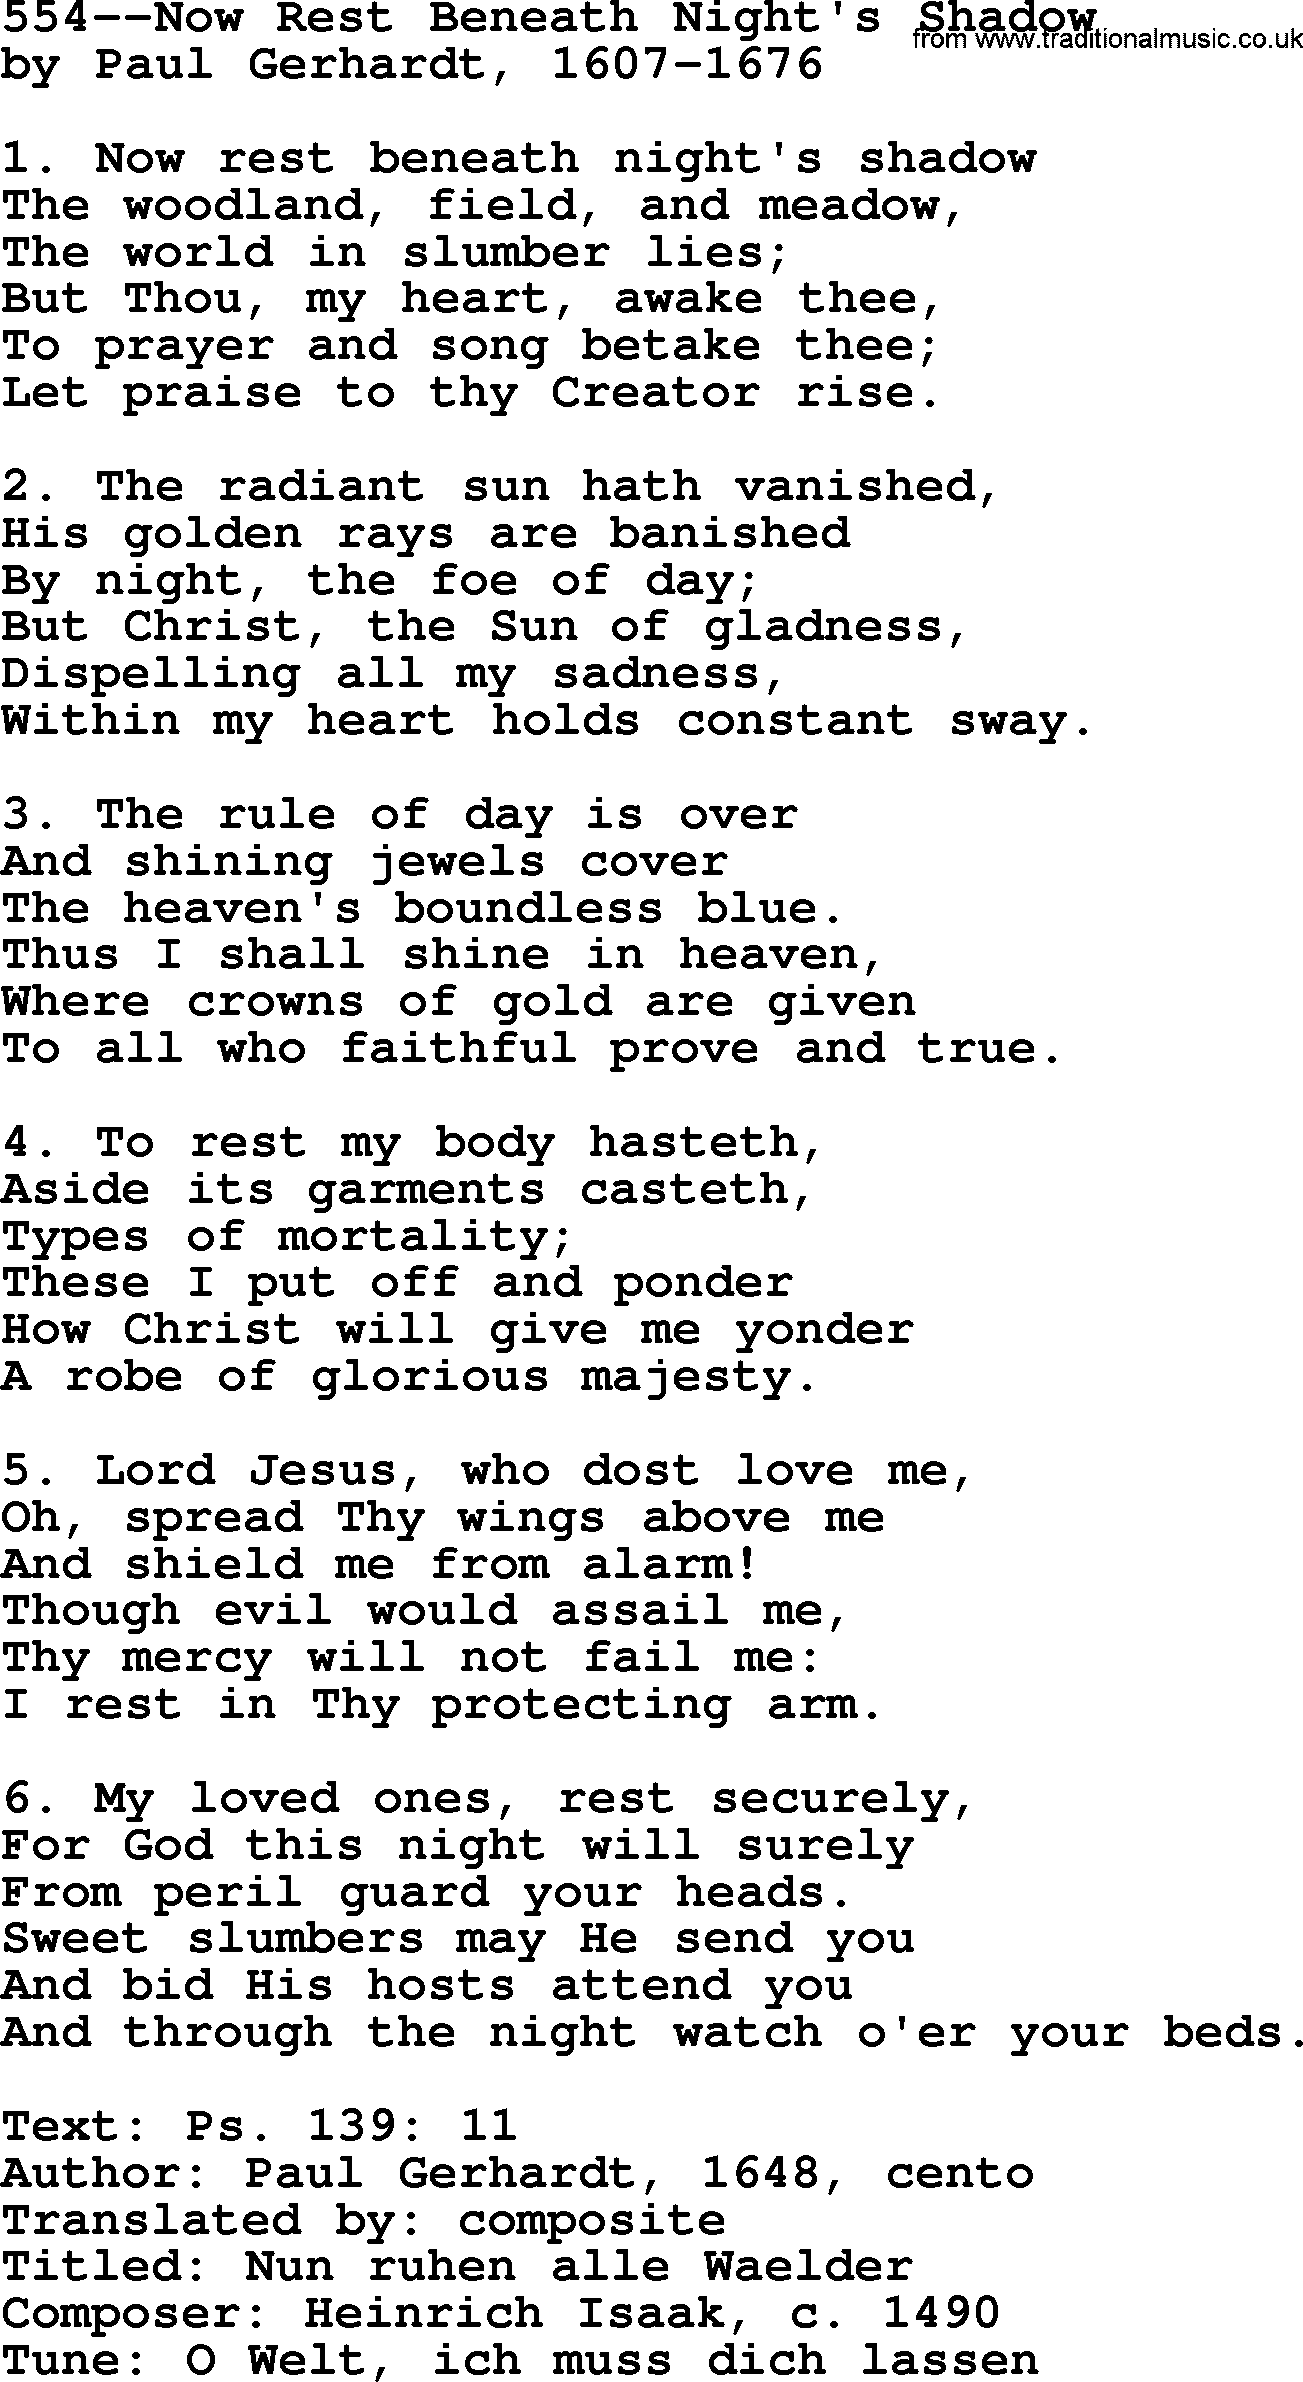 Lutheran Hymn: 554--Now Rest Beneath Night's Shadow.txt lyrics with PDF